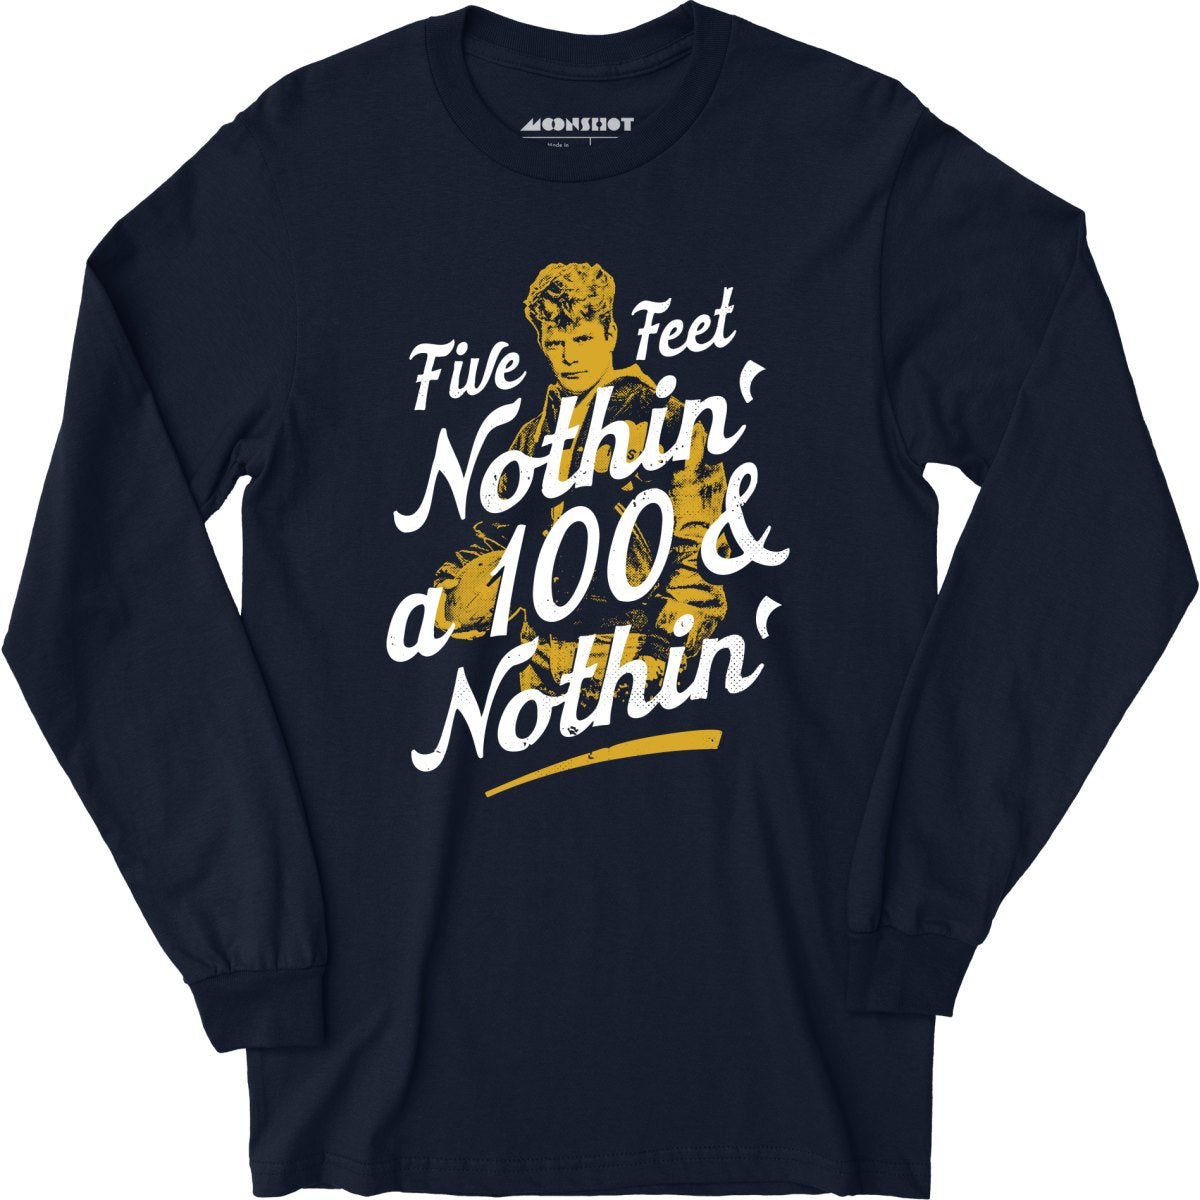 Rudy - Five Feet Nothin' a 100 & Nothin' - Long Sleeve T-Shirt